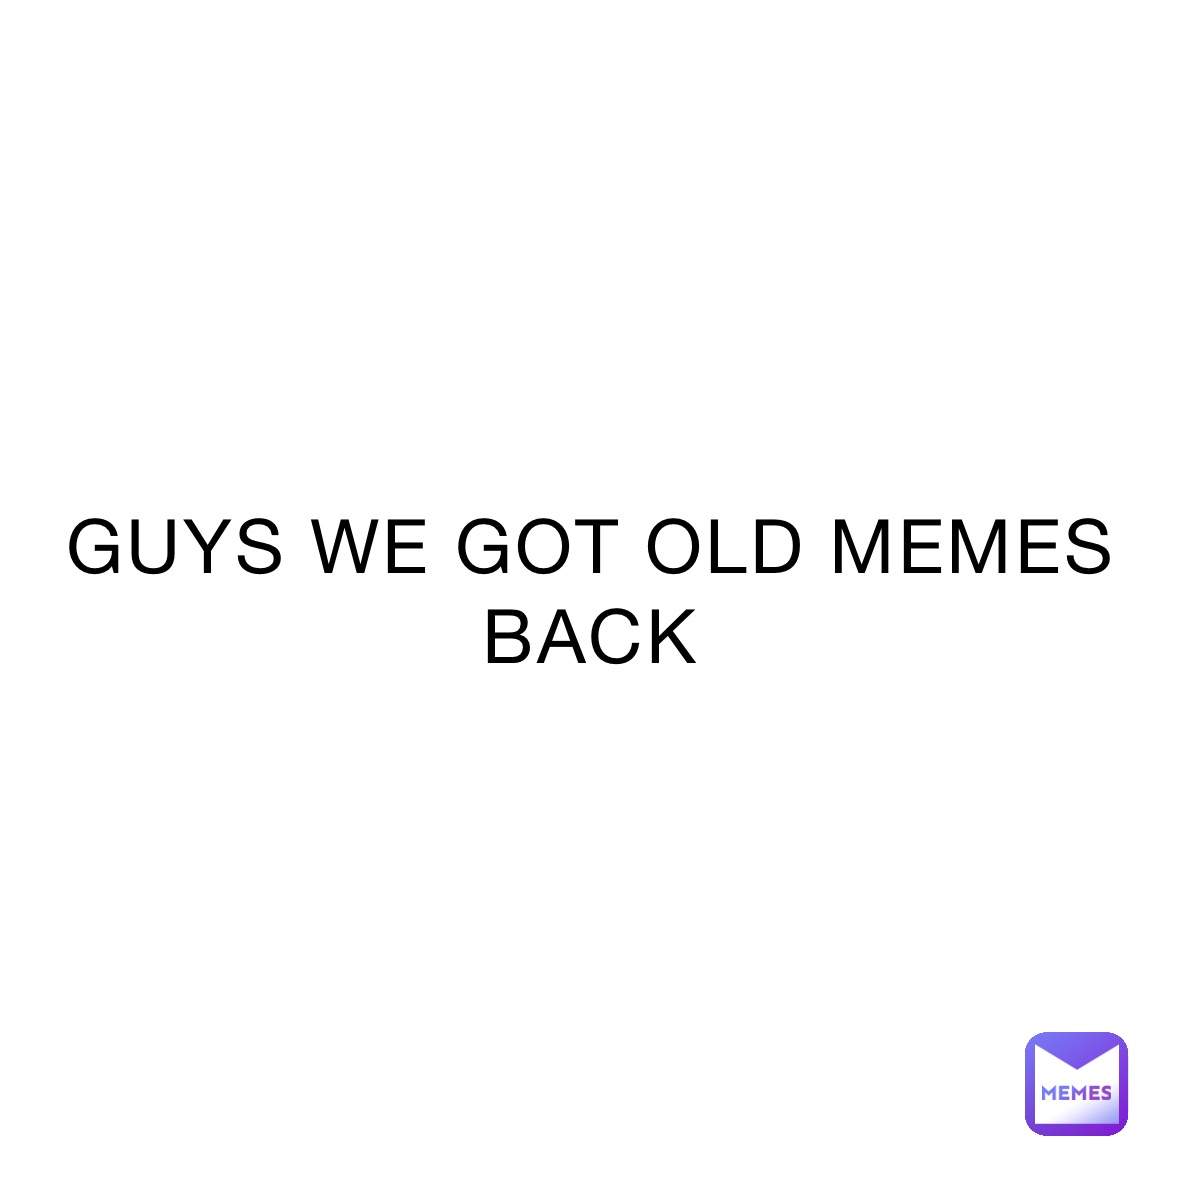 GUYS WE GOT OLD MEMES BACK